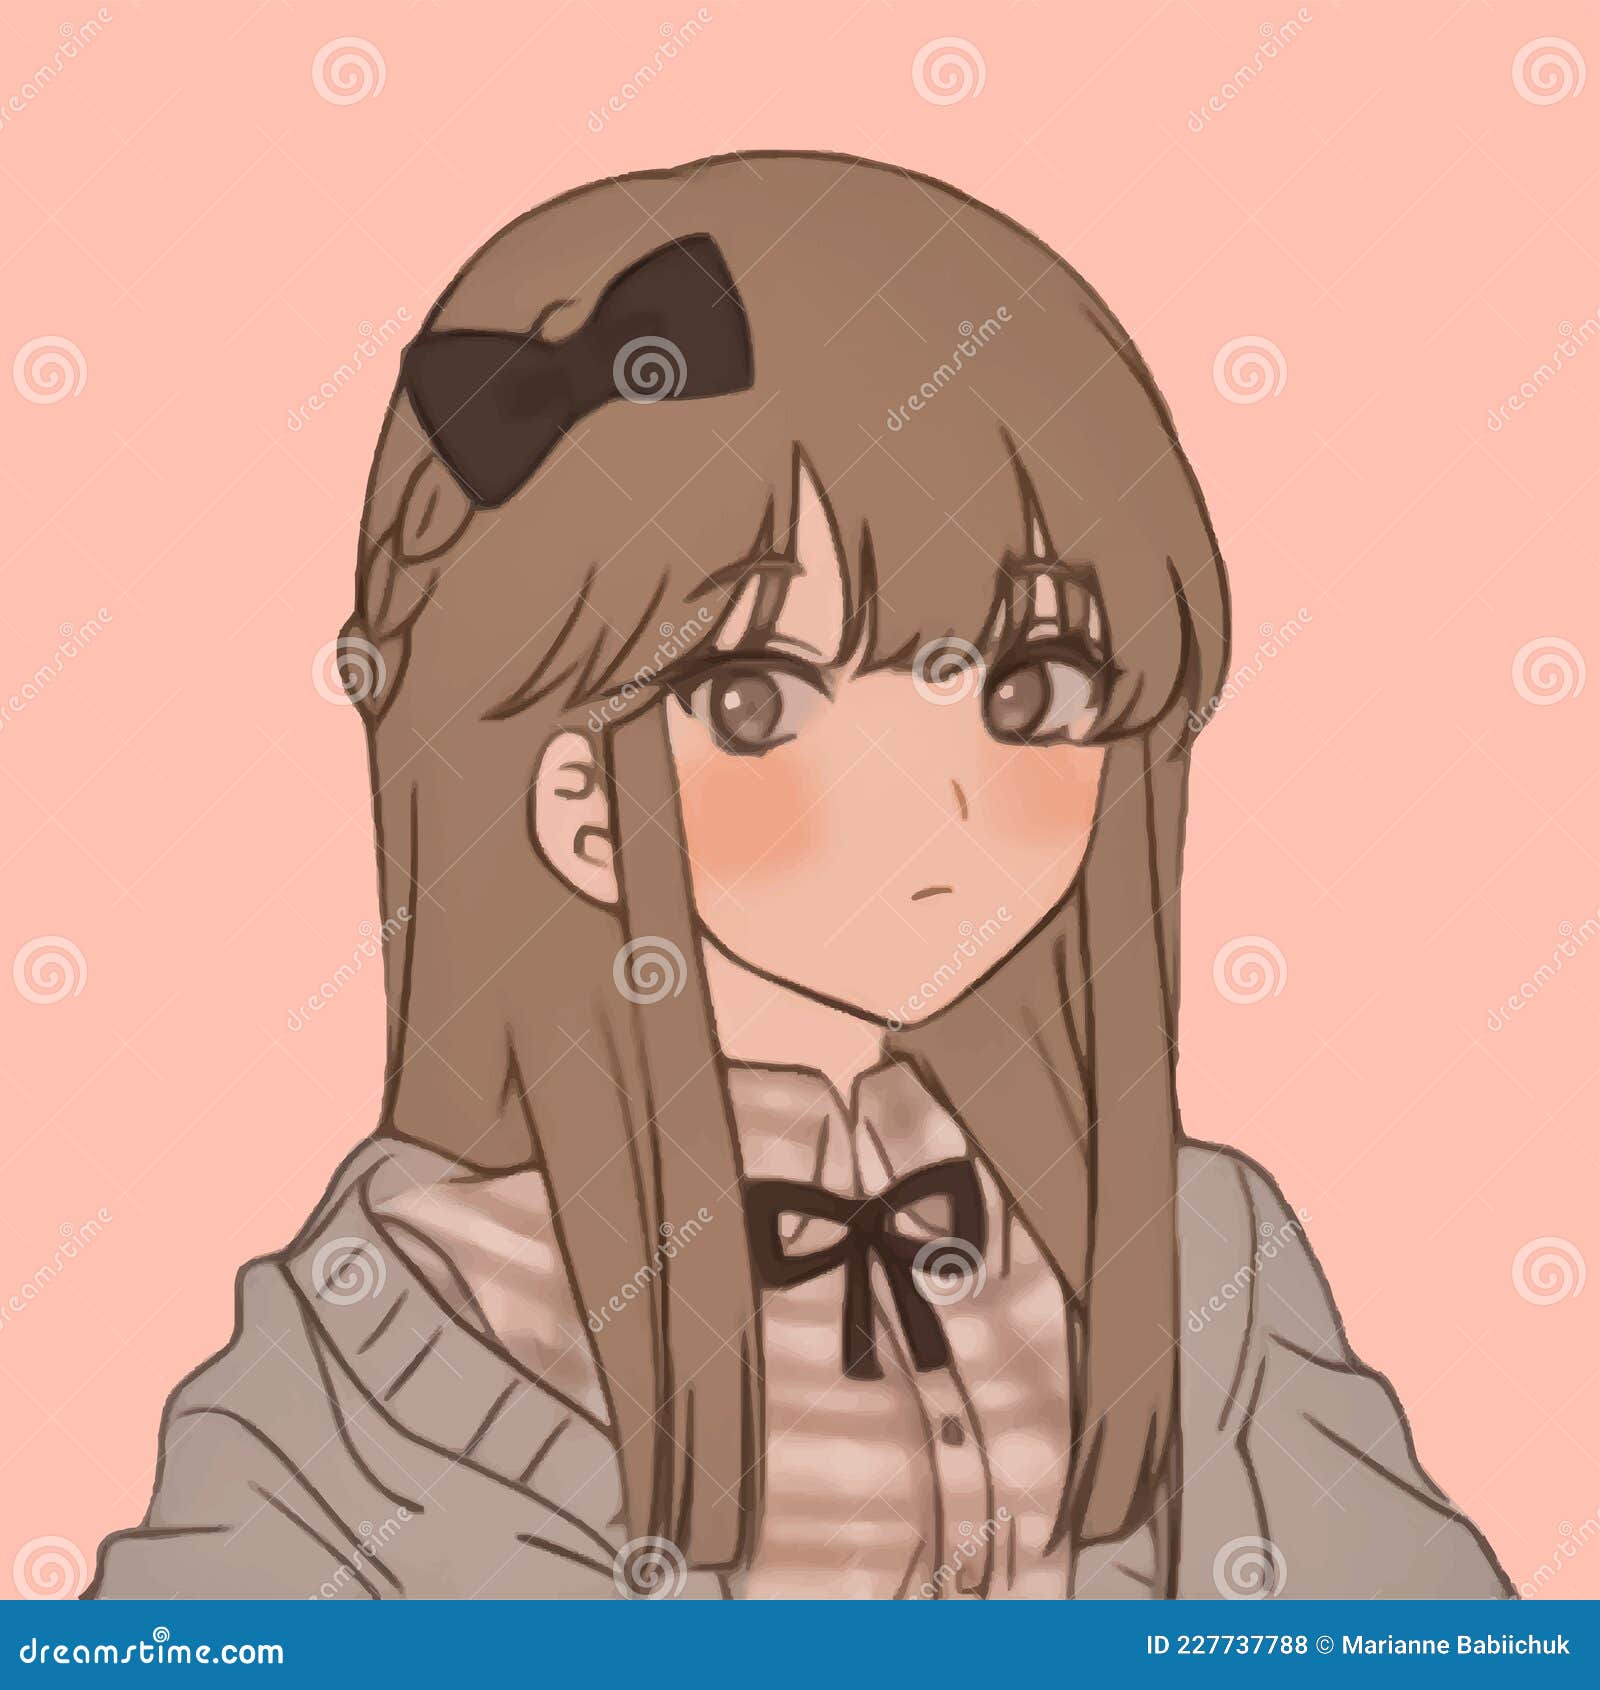 Cute Anime Girl with Bow on Her Hair Stock Vector - Illustration of carps,  cute: 227737788